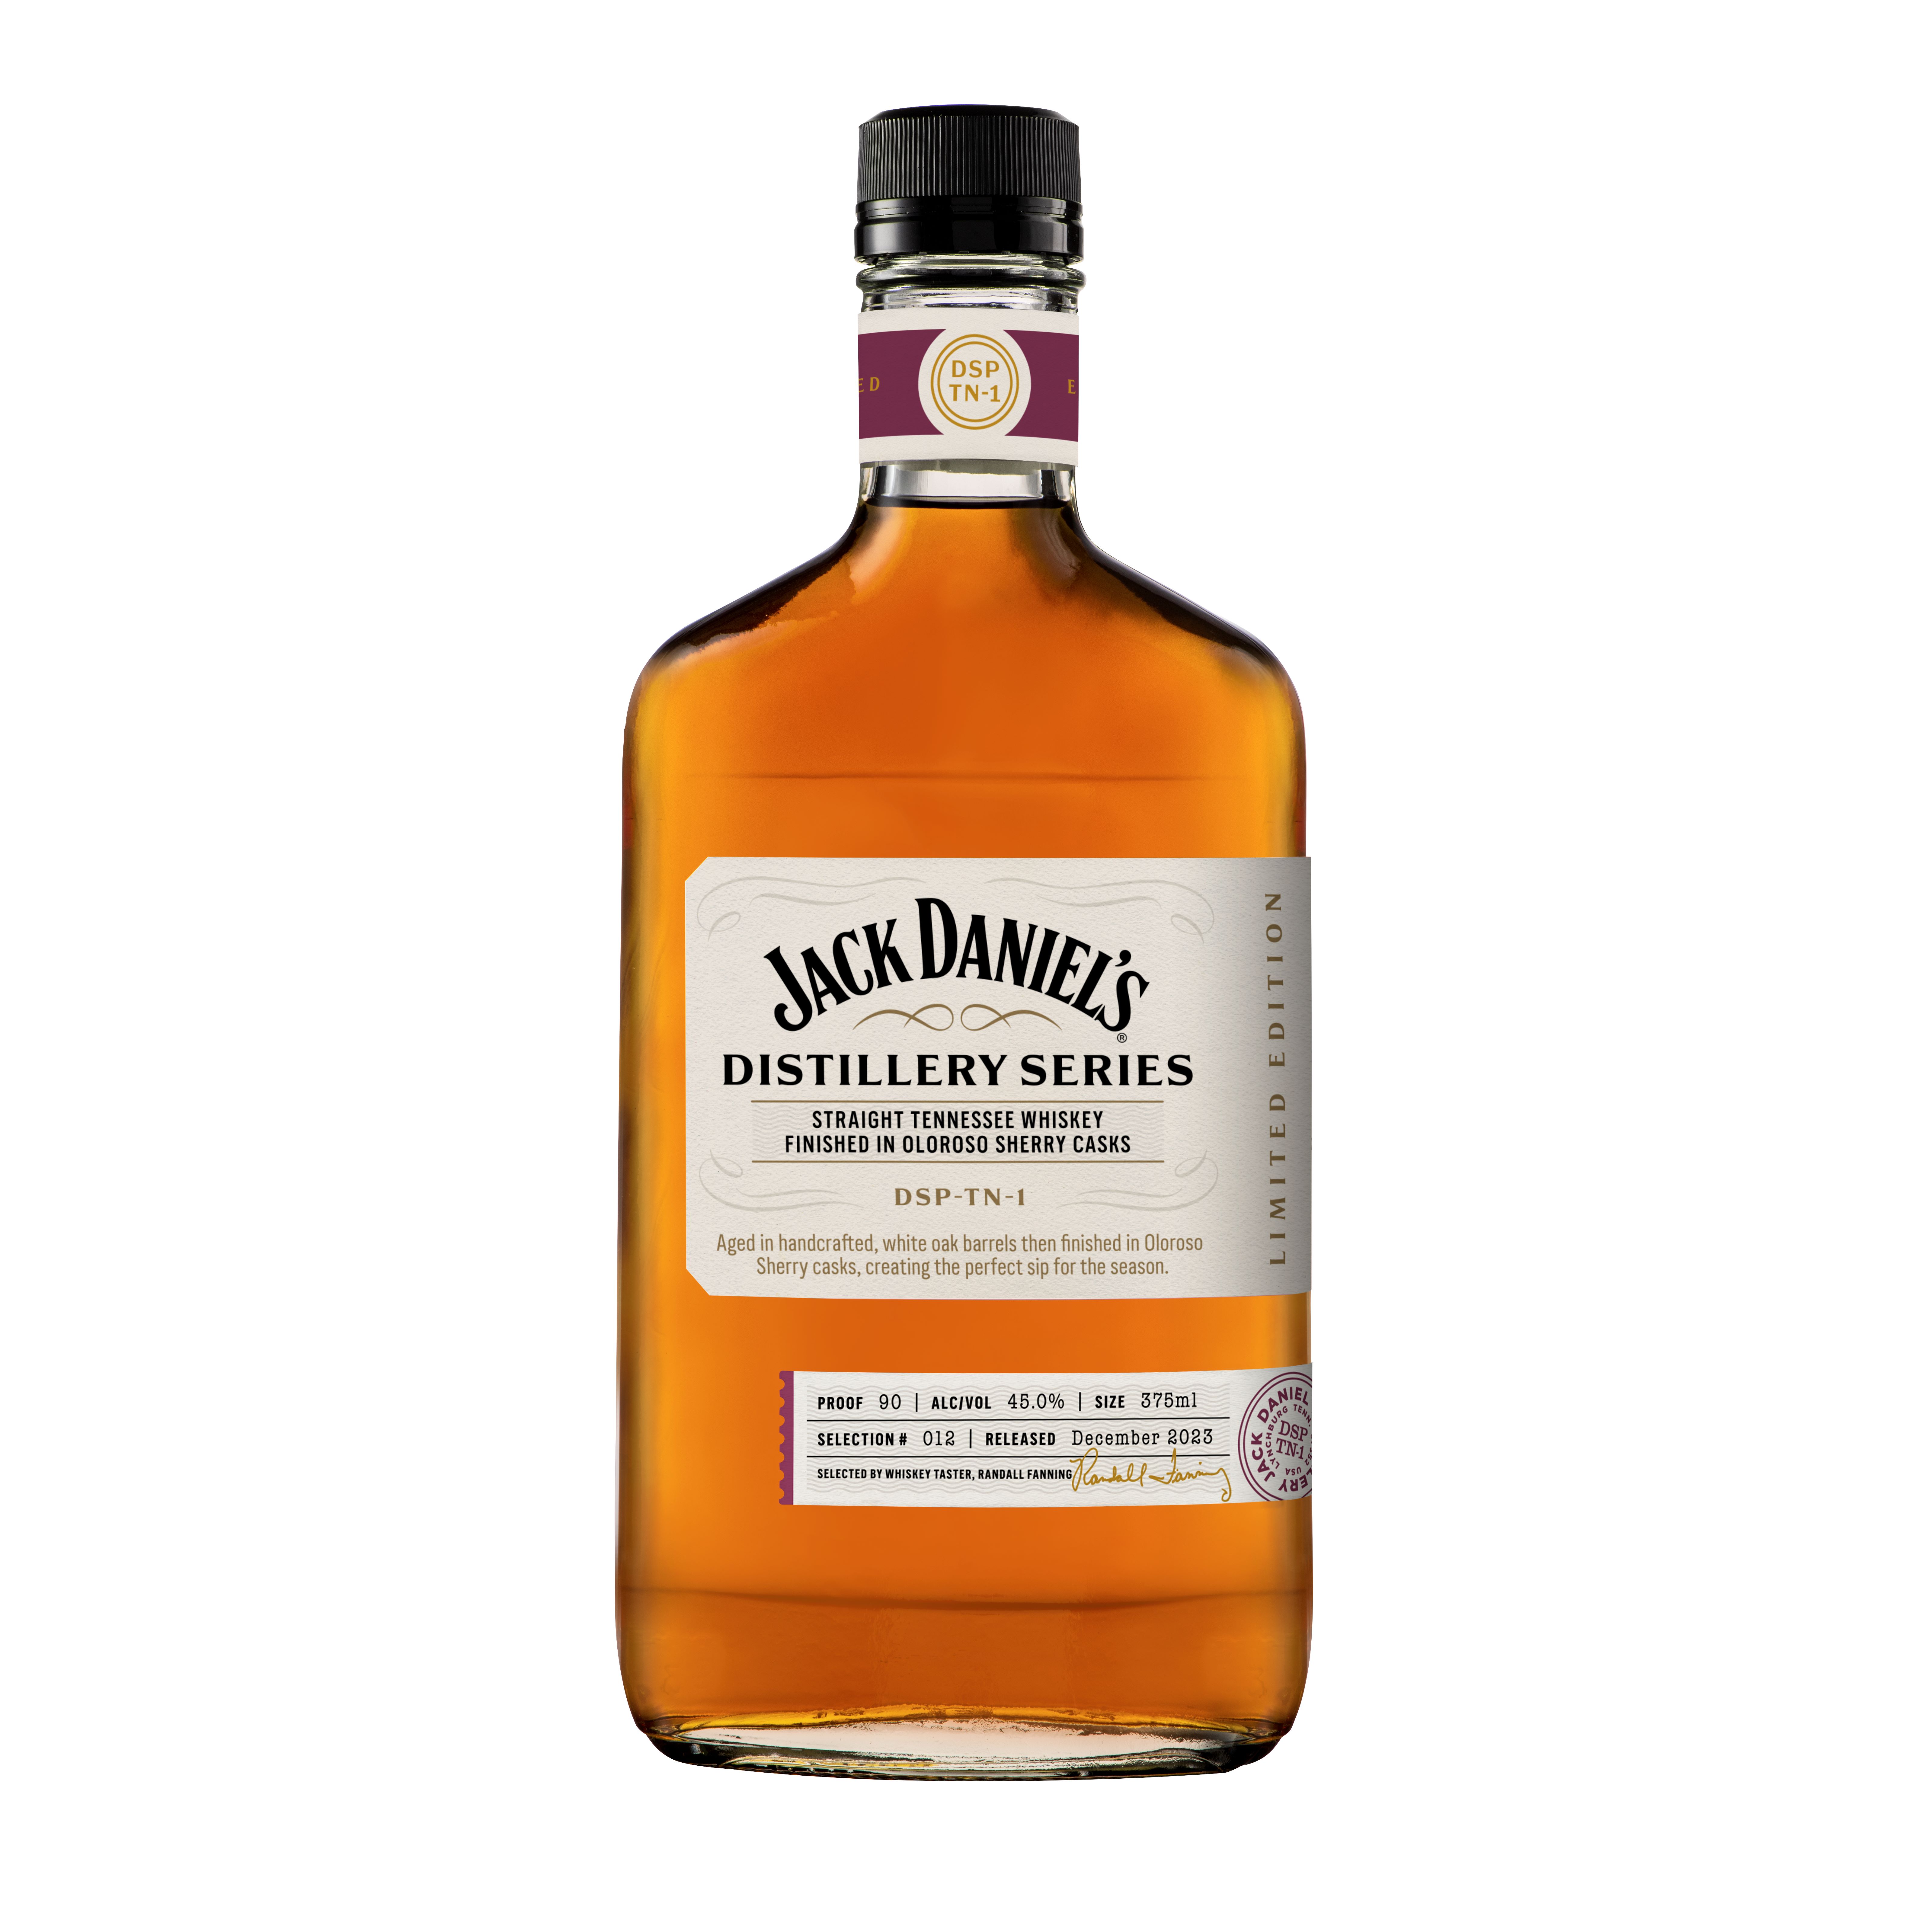 Jack Daniel’s Newest Distillery Series Highlights Oloroso Sherry Casks